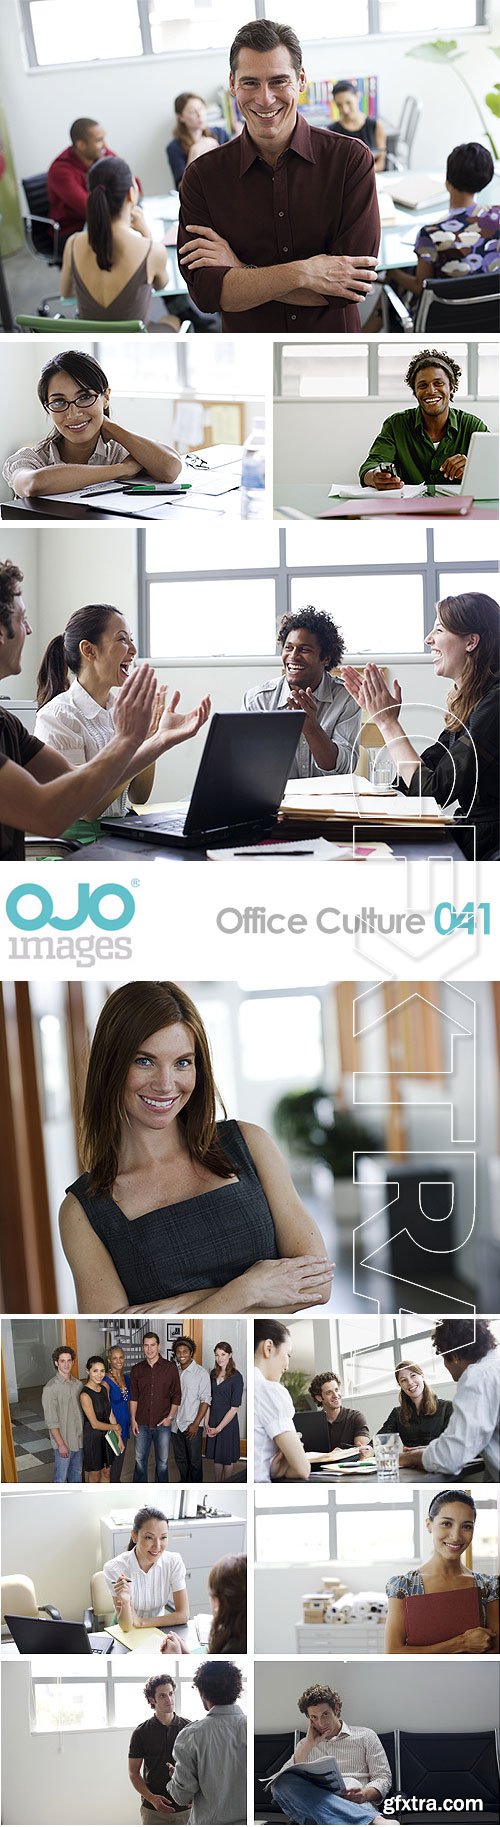 OJO Images OJ041 Office Culture